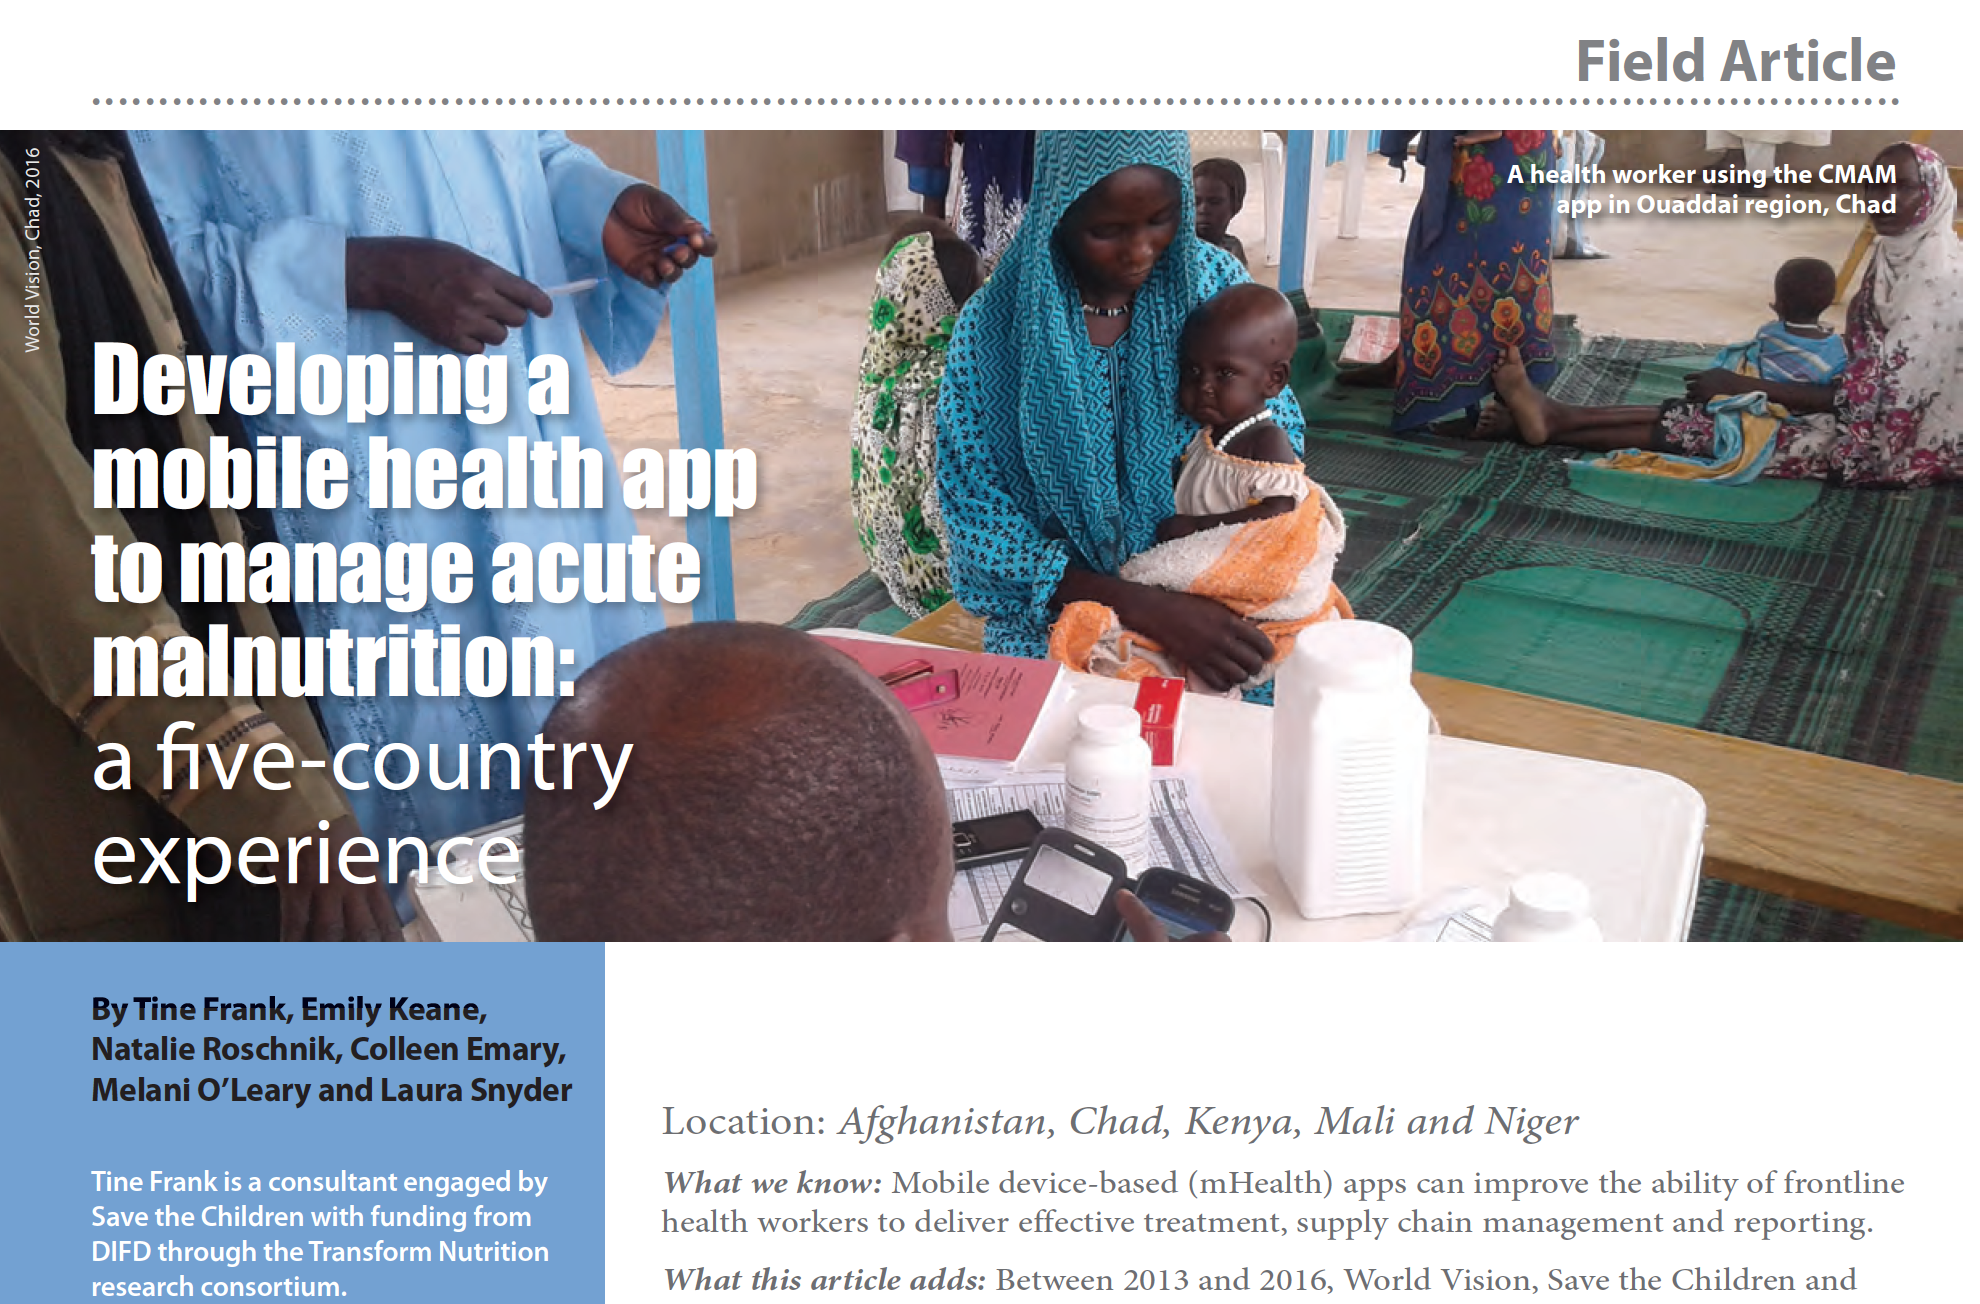 Photo: Field Article_CMAM Mobile Health App